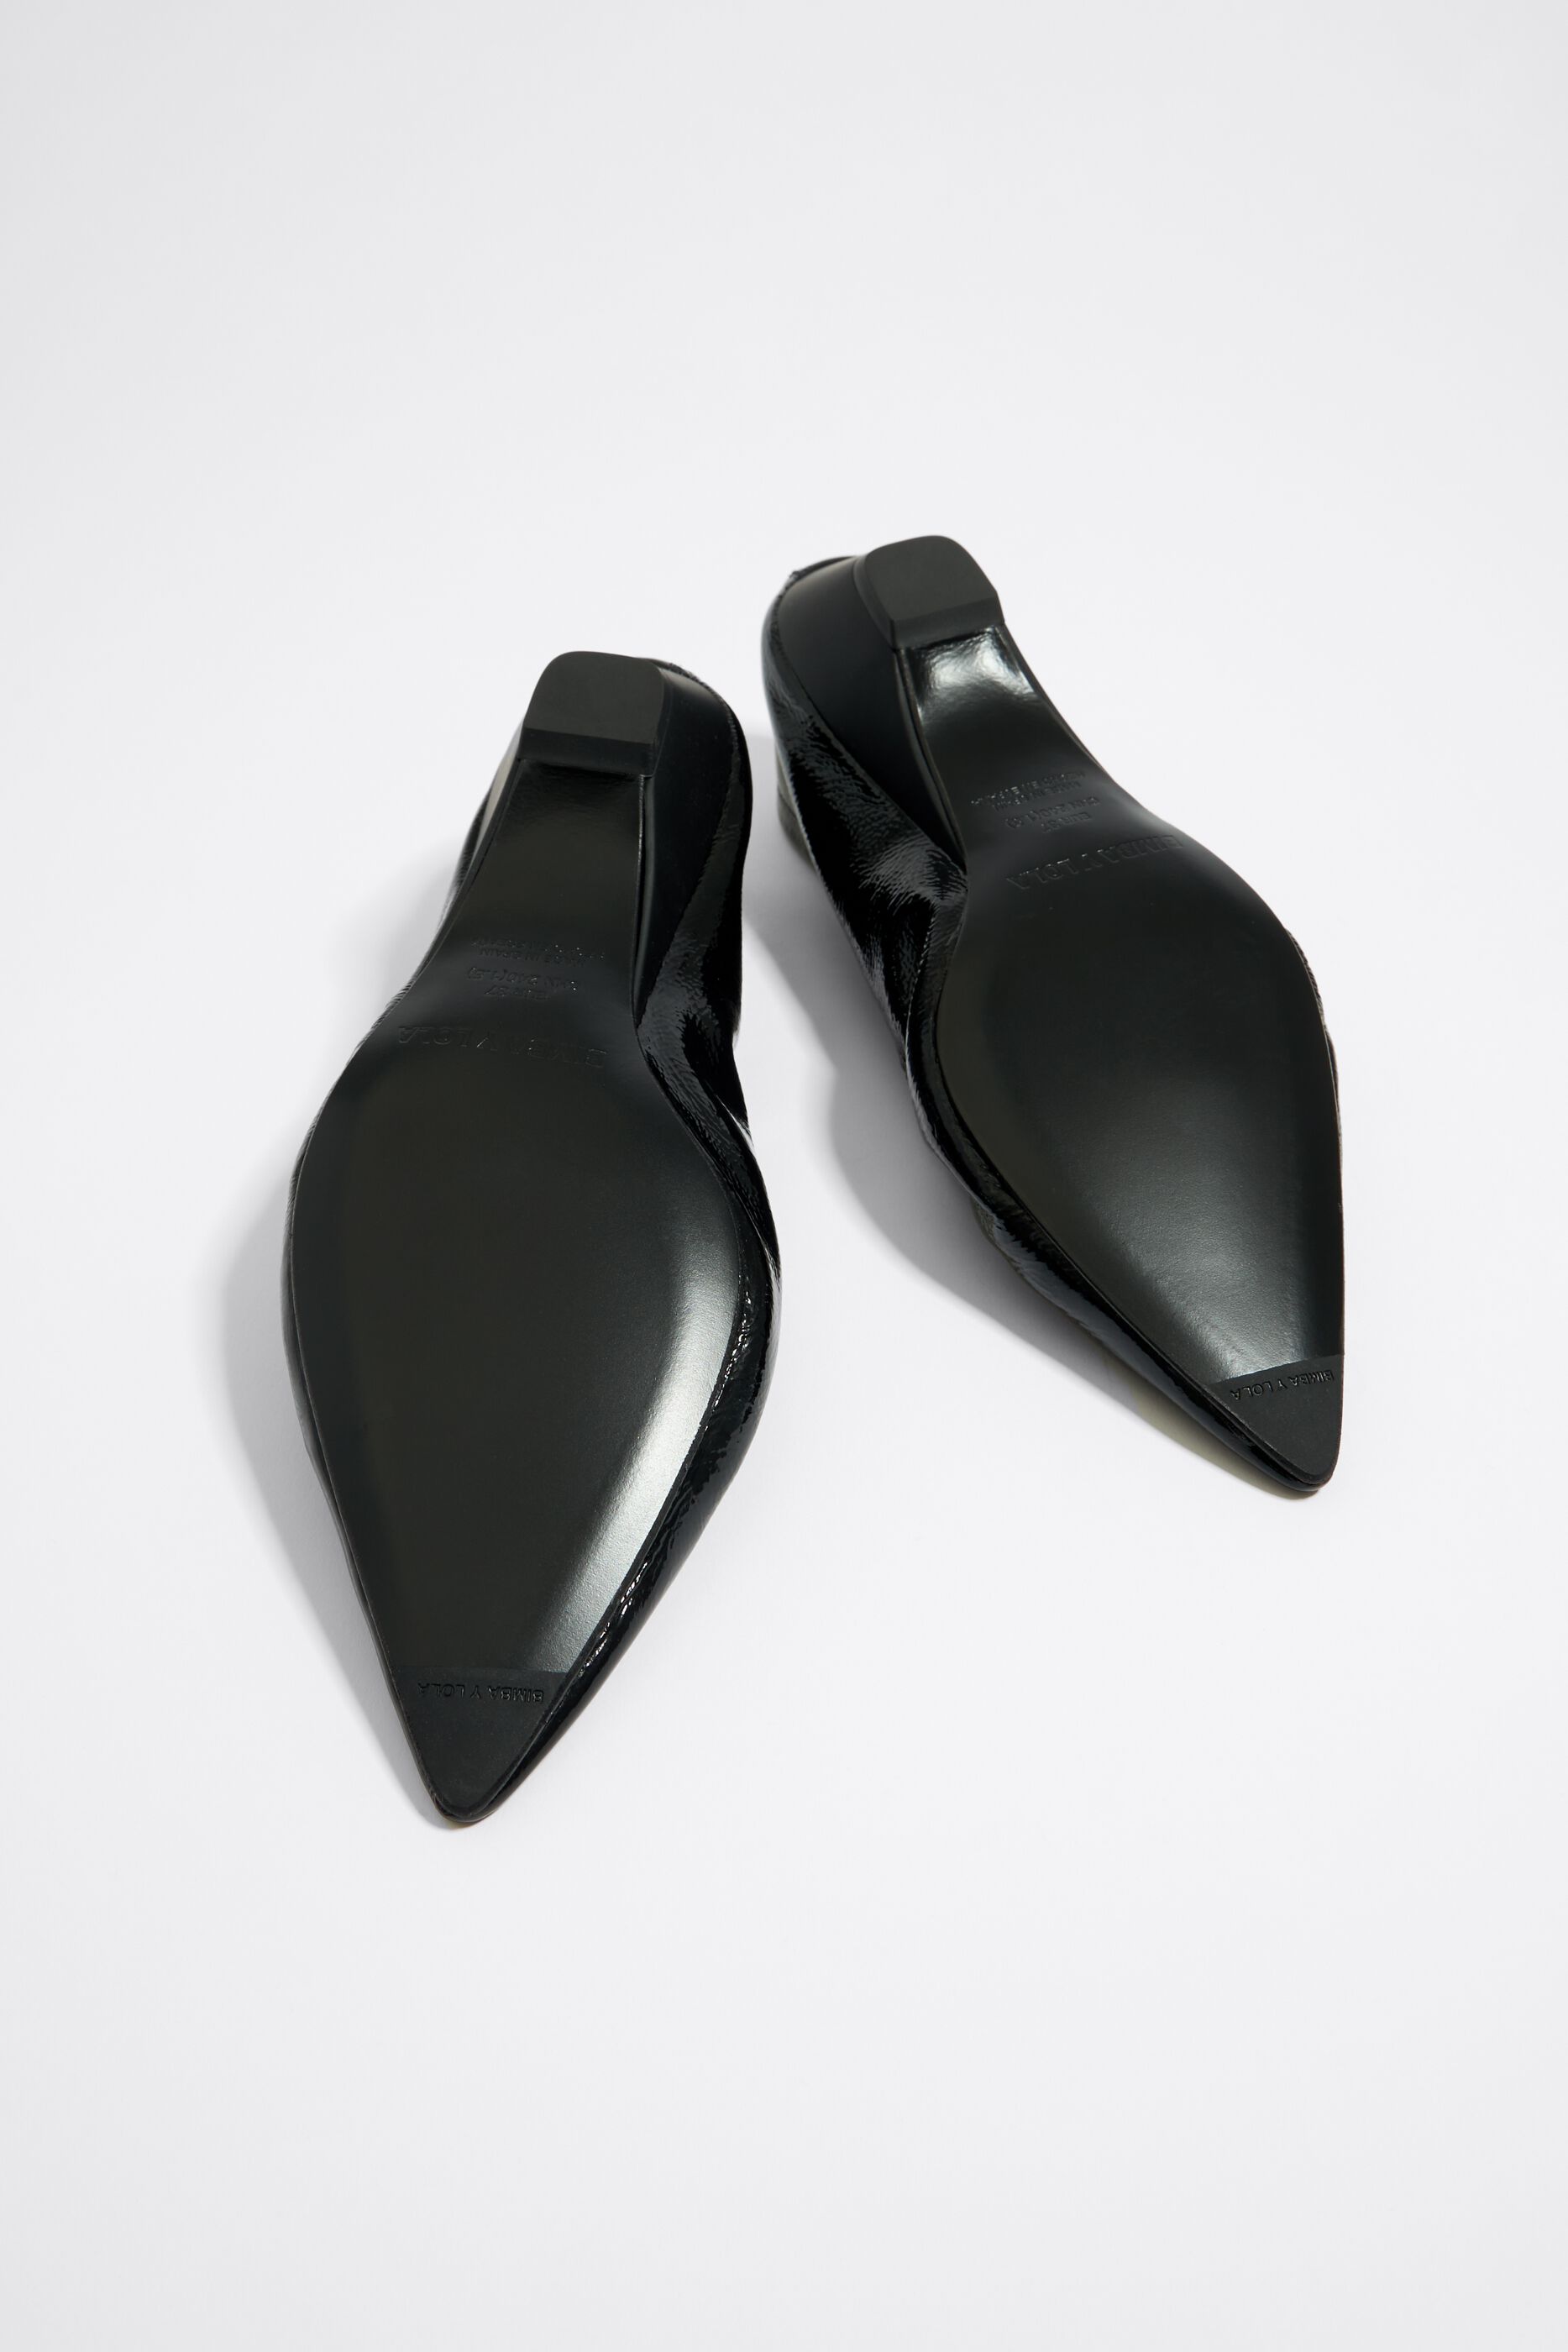 Black leather court shoe